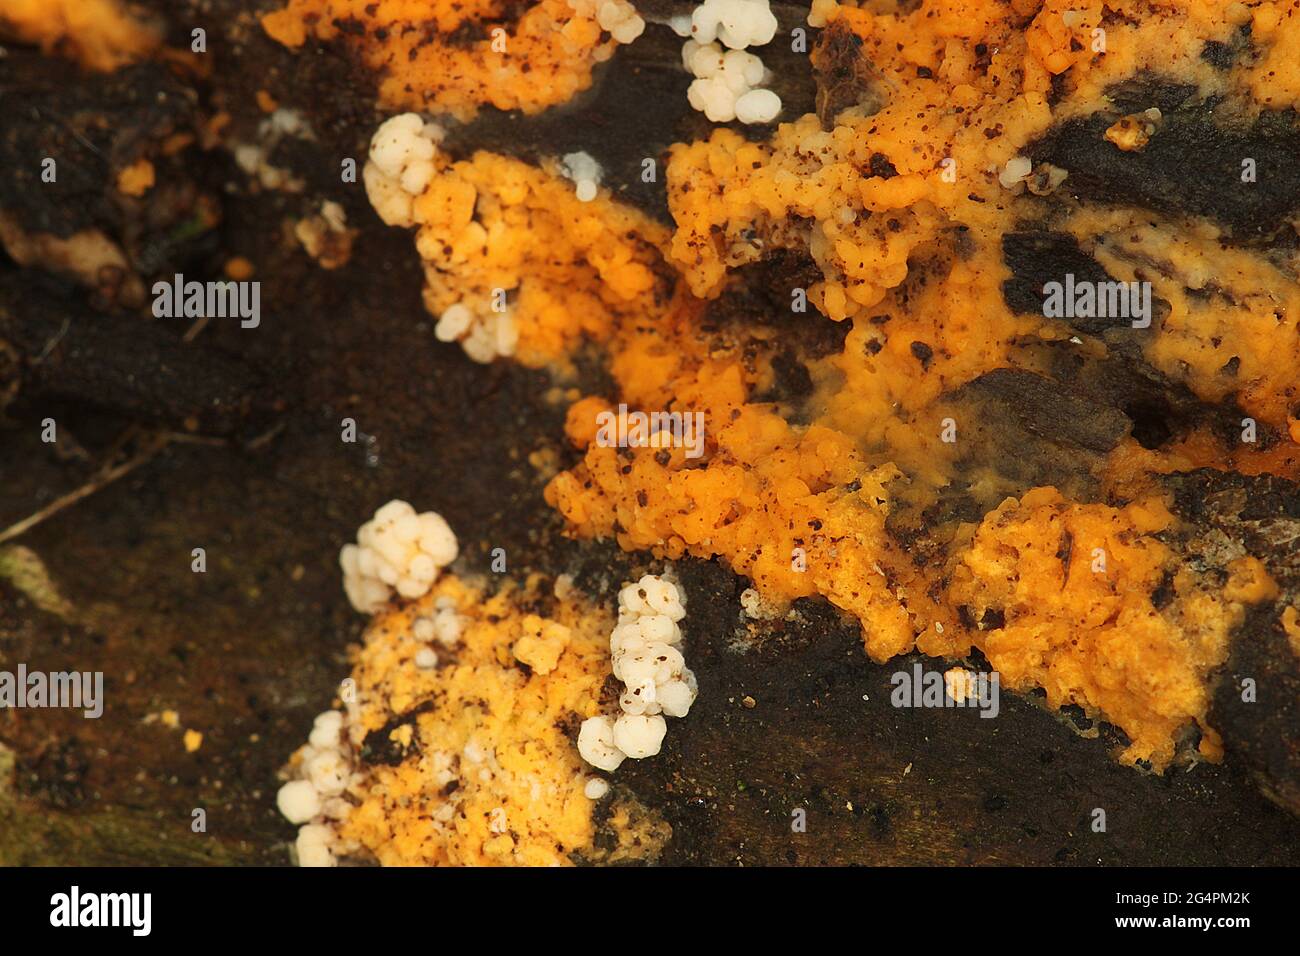 Slime mold/jelly fungus  (Dacrymyces?) Stock Photo